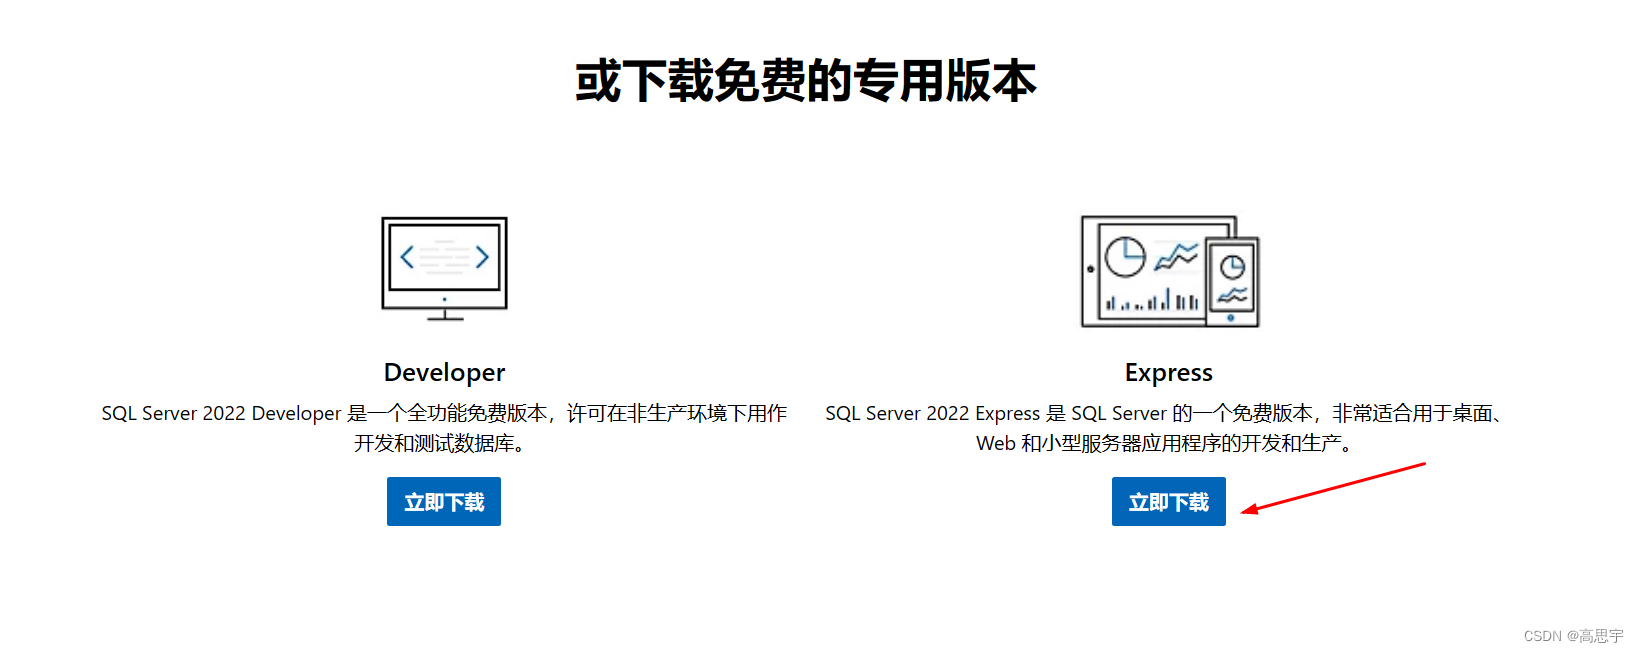 Window Server 2019服务器上安装SQL Server数据库